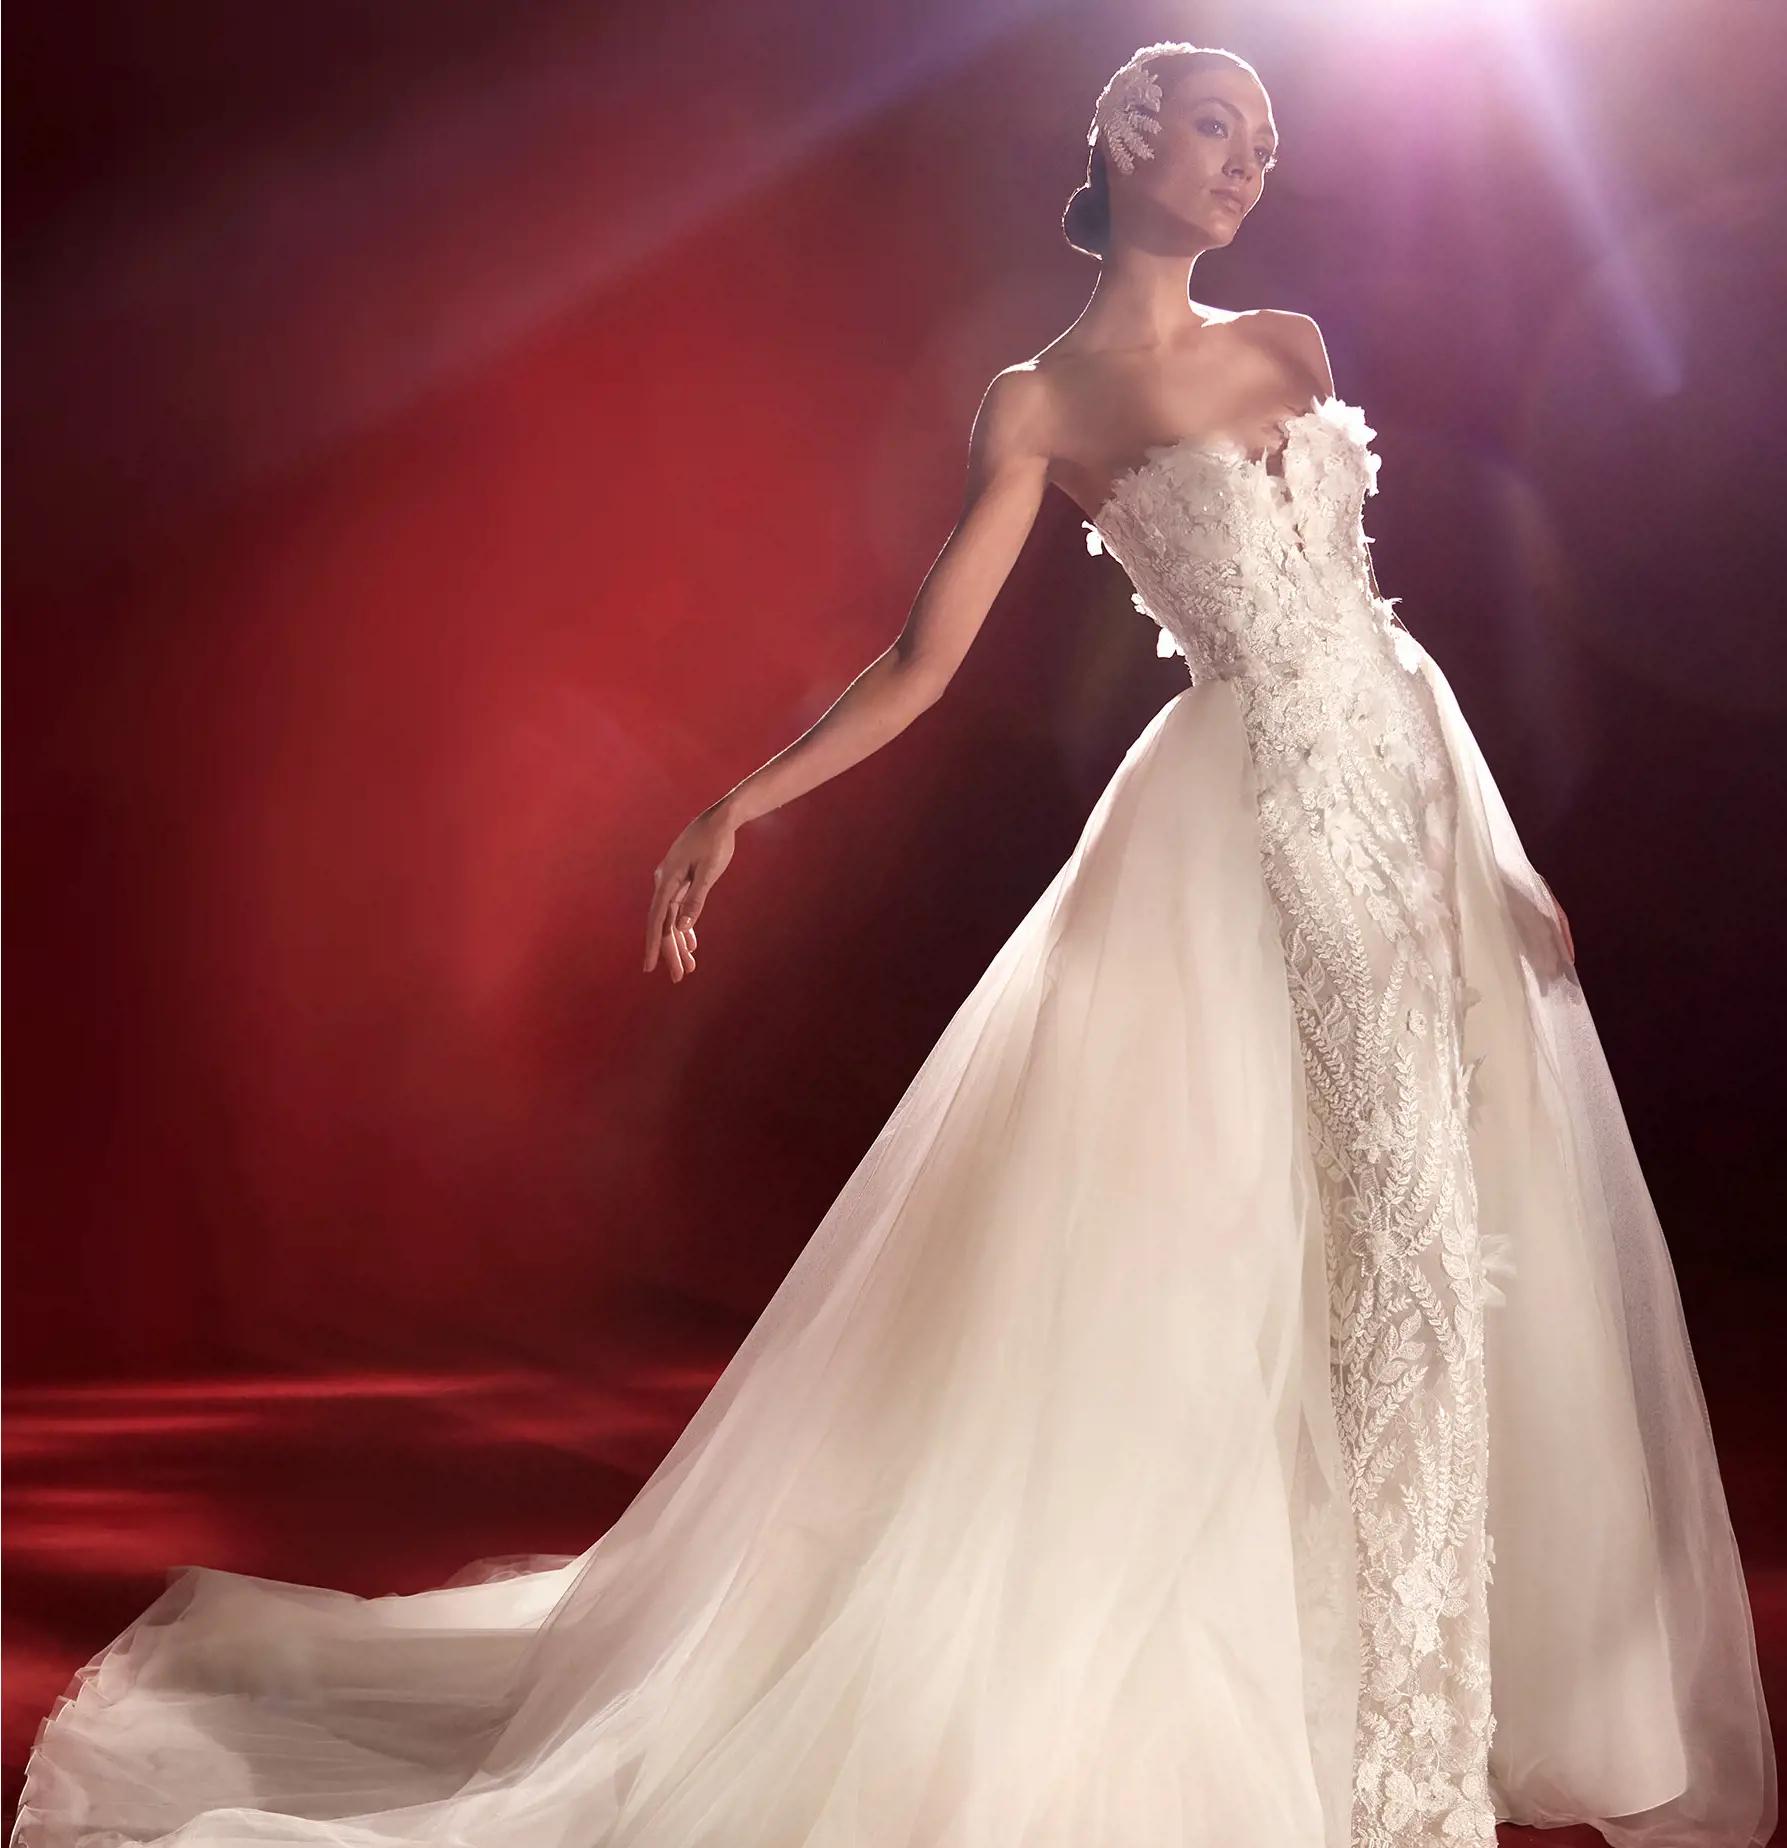 Wedding Dresses That Will Make You Feel Like a Princess! Image